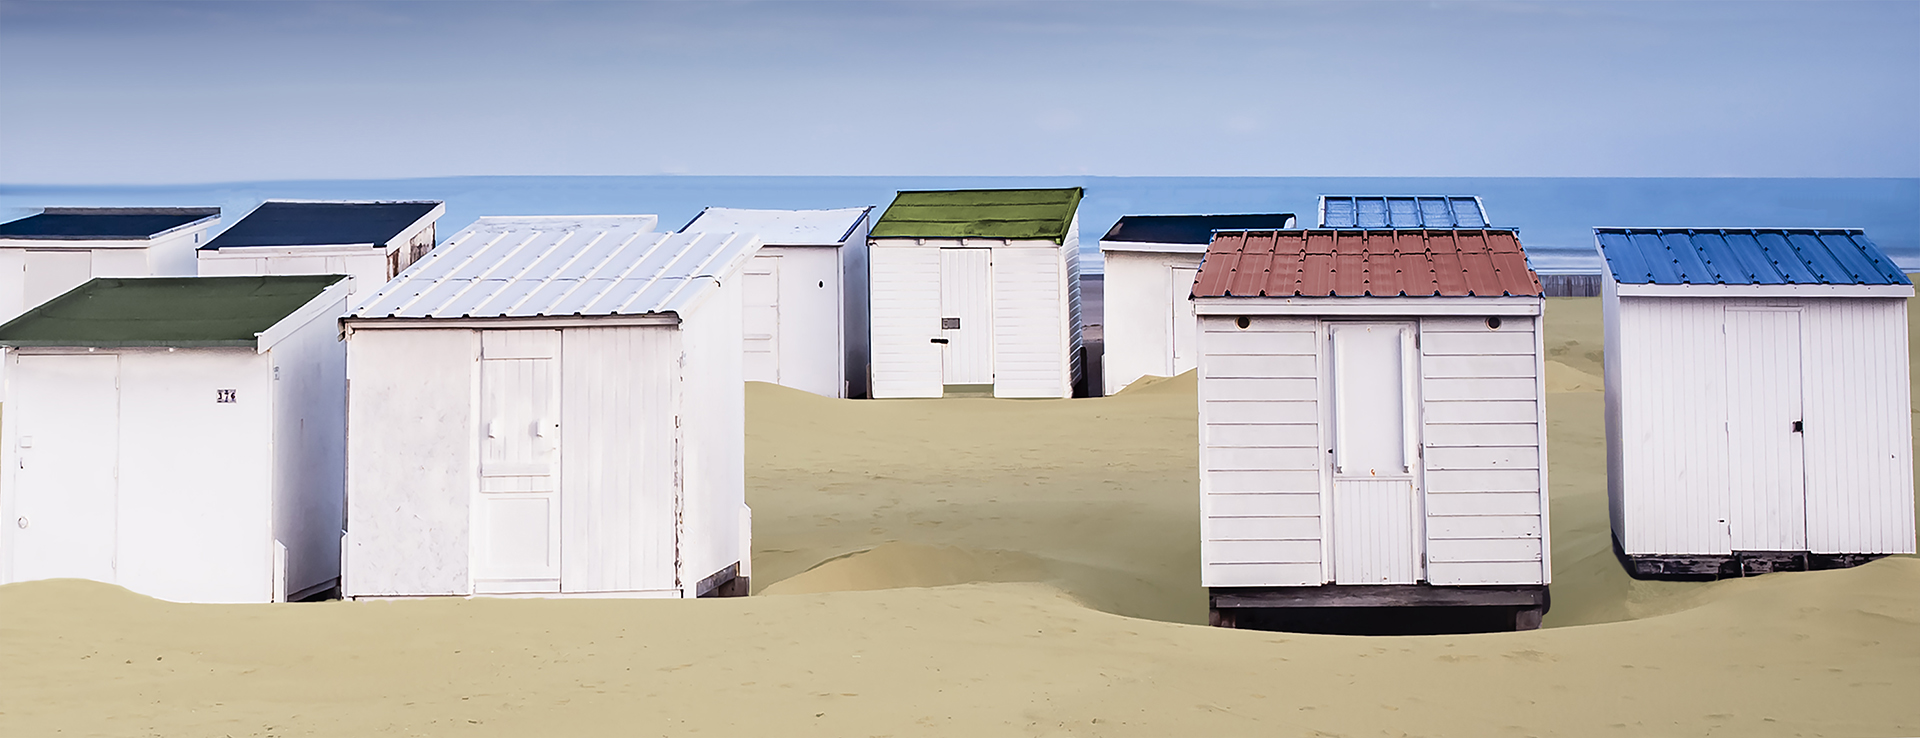 Susan Whitbread Calais Beach Huts Merit May 2019   Architecture